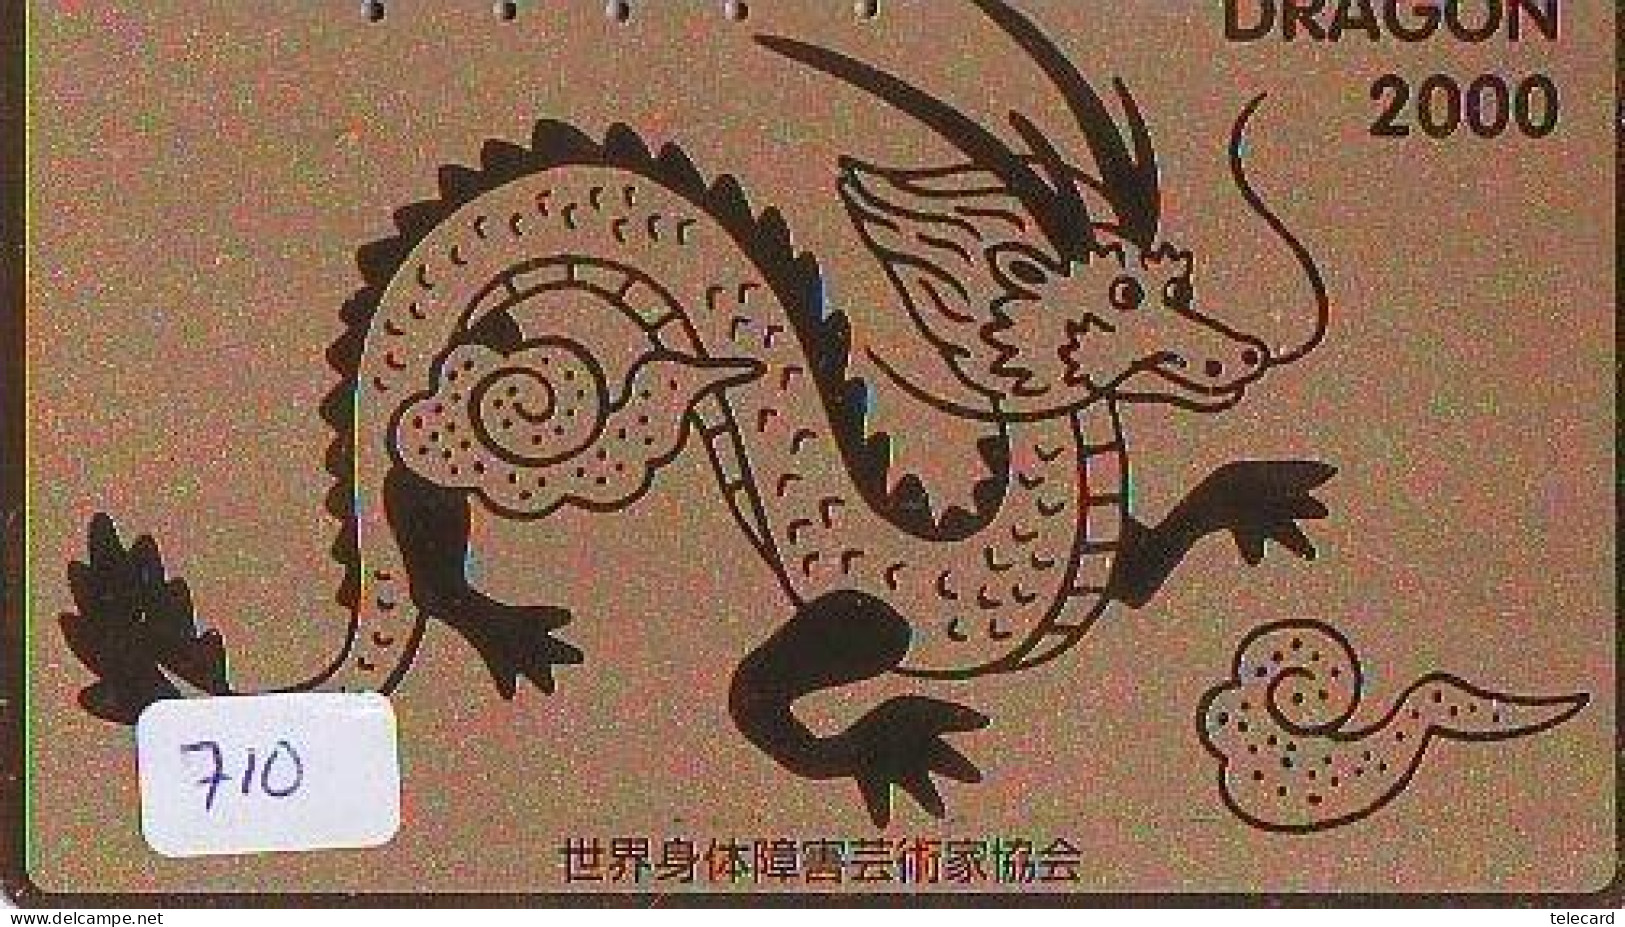 Télécarte Japon * DRAGON L'ESTRAGON DRACHE DRAGÓN DRAGO (710) Zodiaque - Zodiac Horoscope * Phonecard Japan - Zodiac